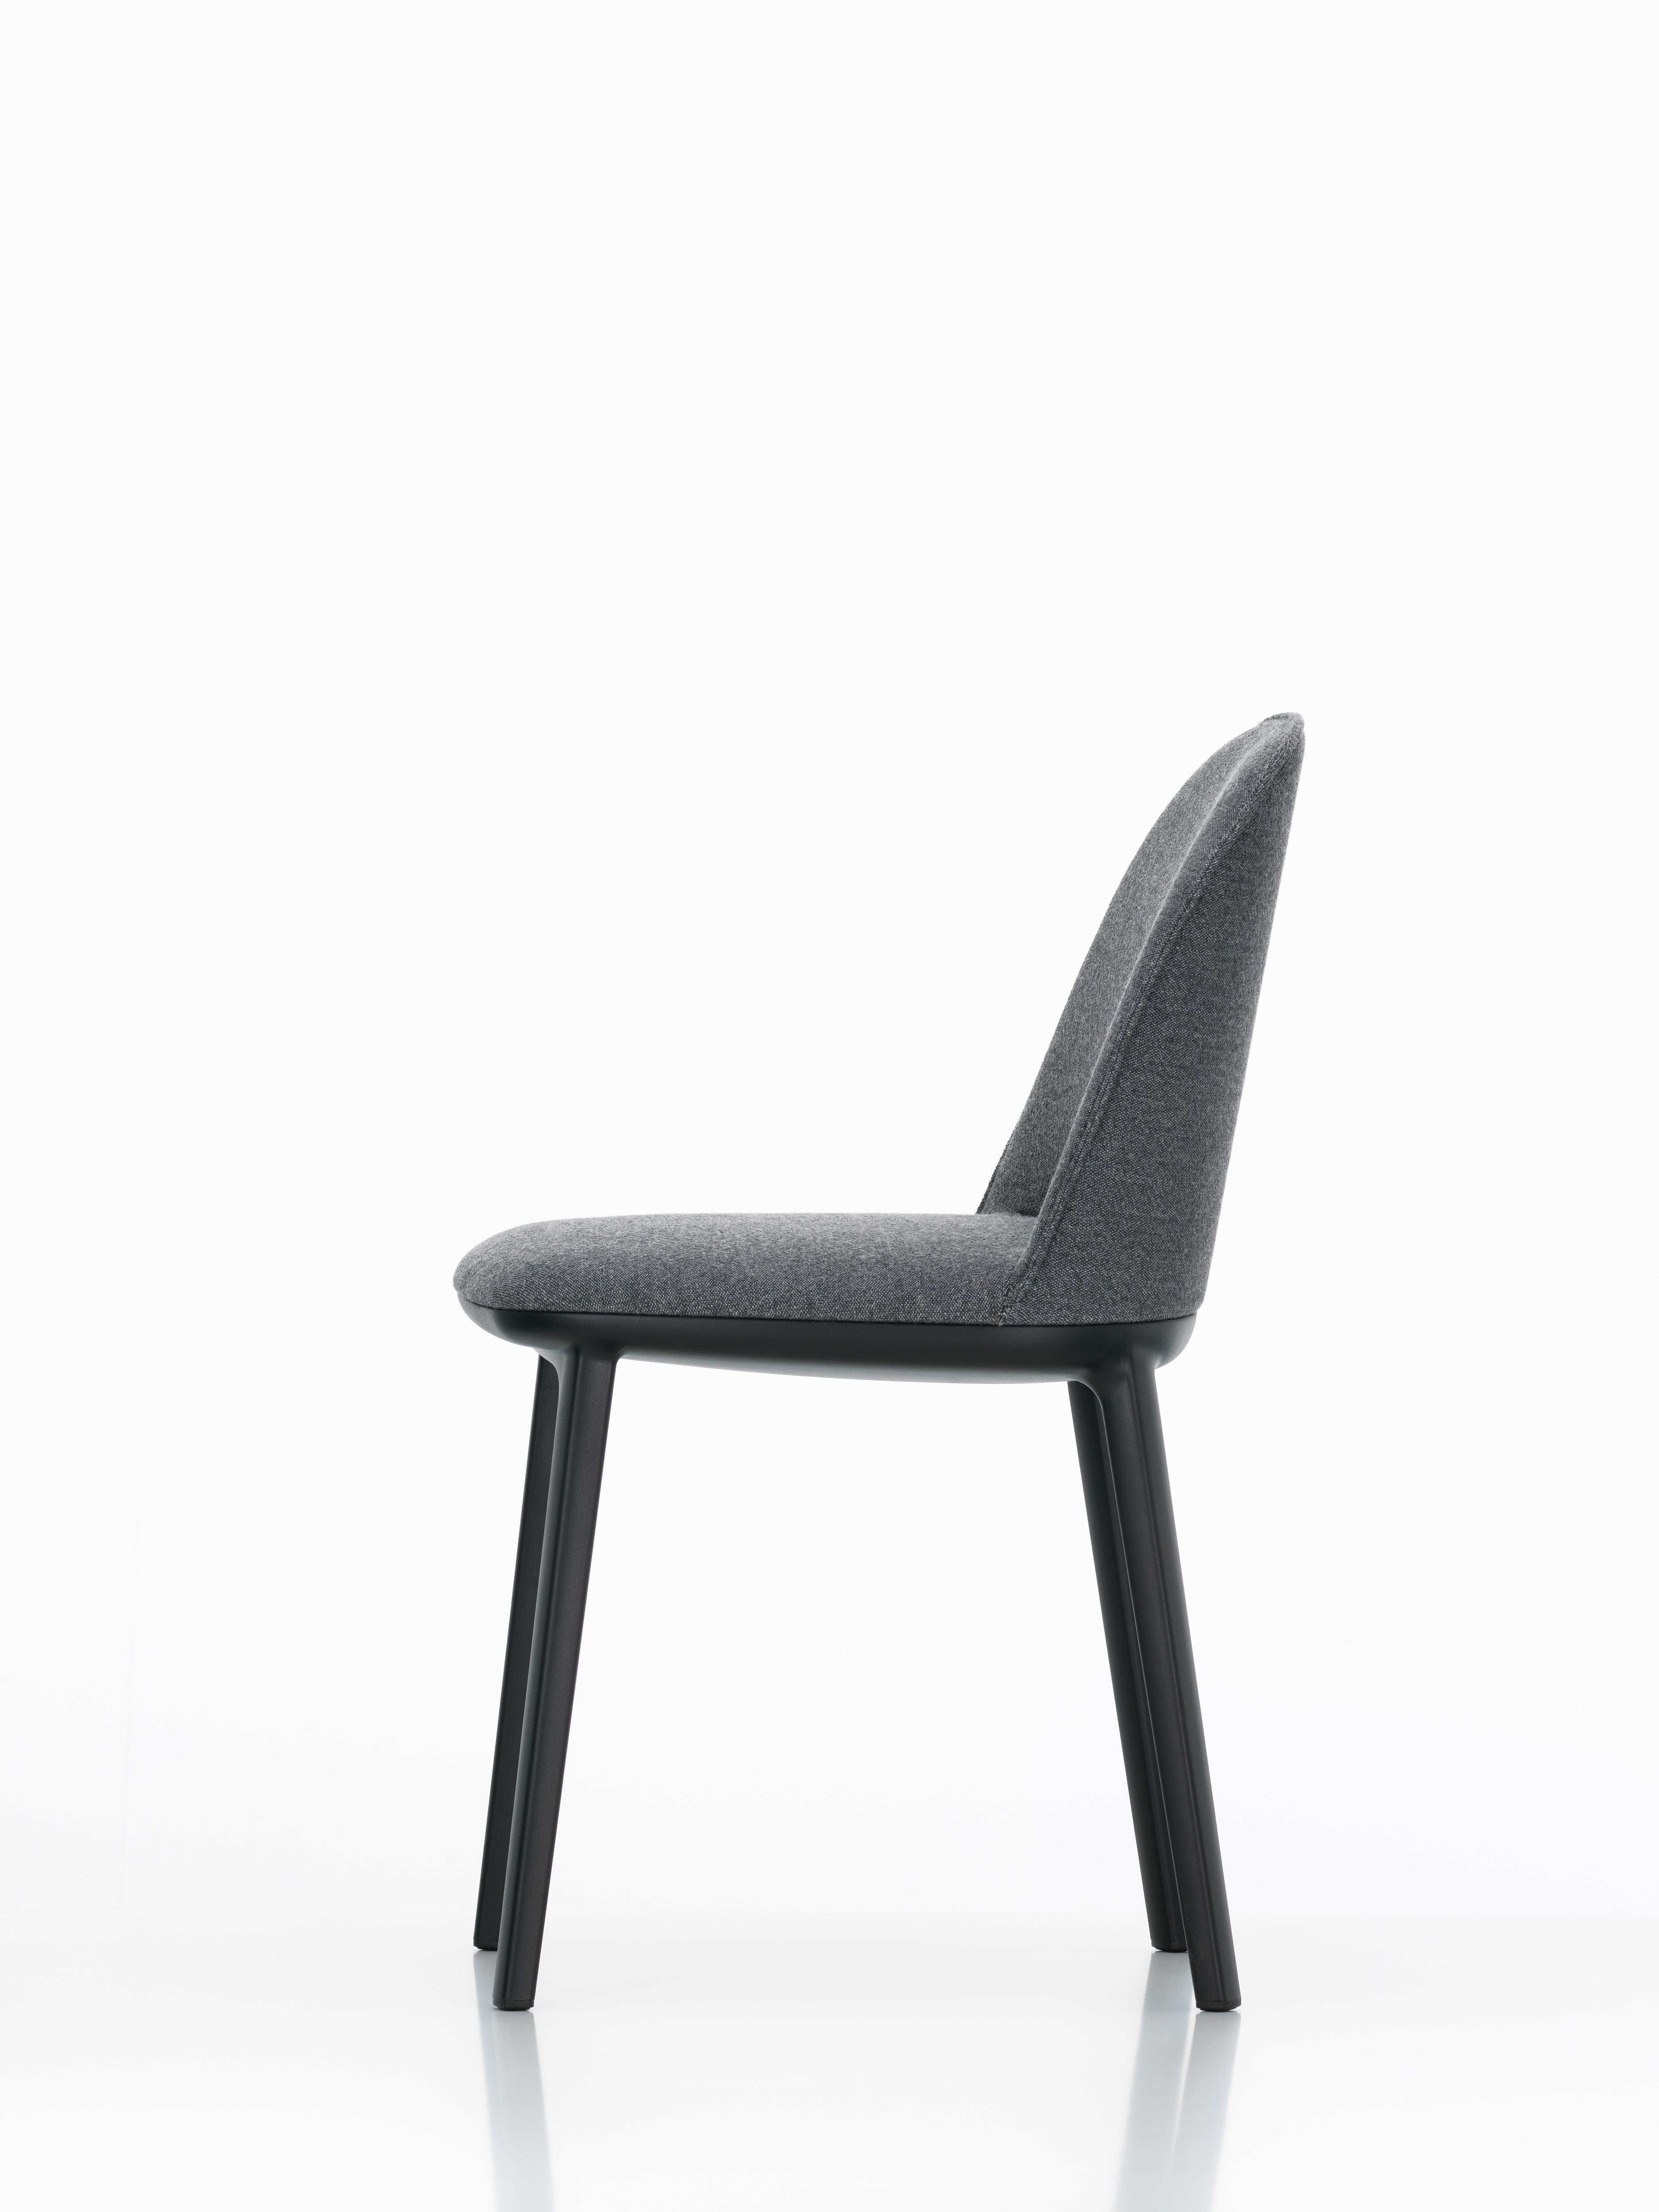 Modern Vitra Softshell Side Chair in Dark Grey Plano by Ronan & Erwan Bouroullec For Sale